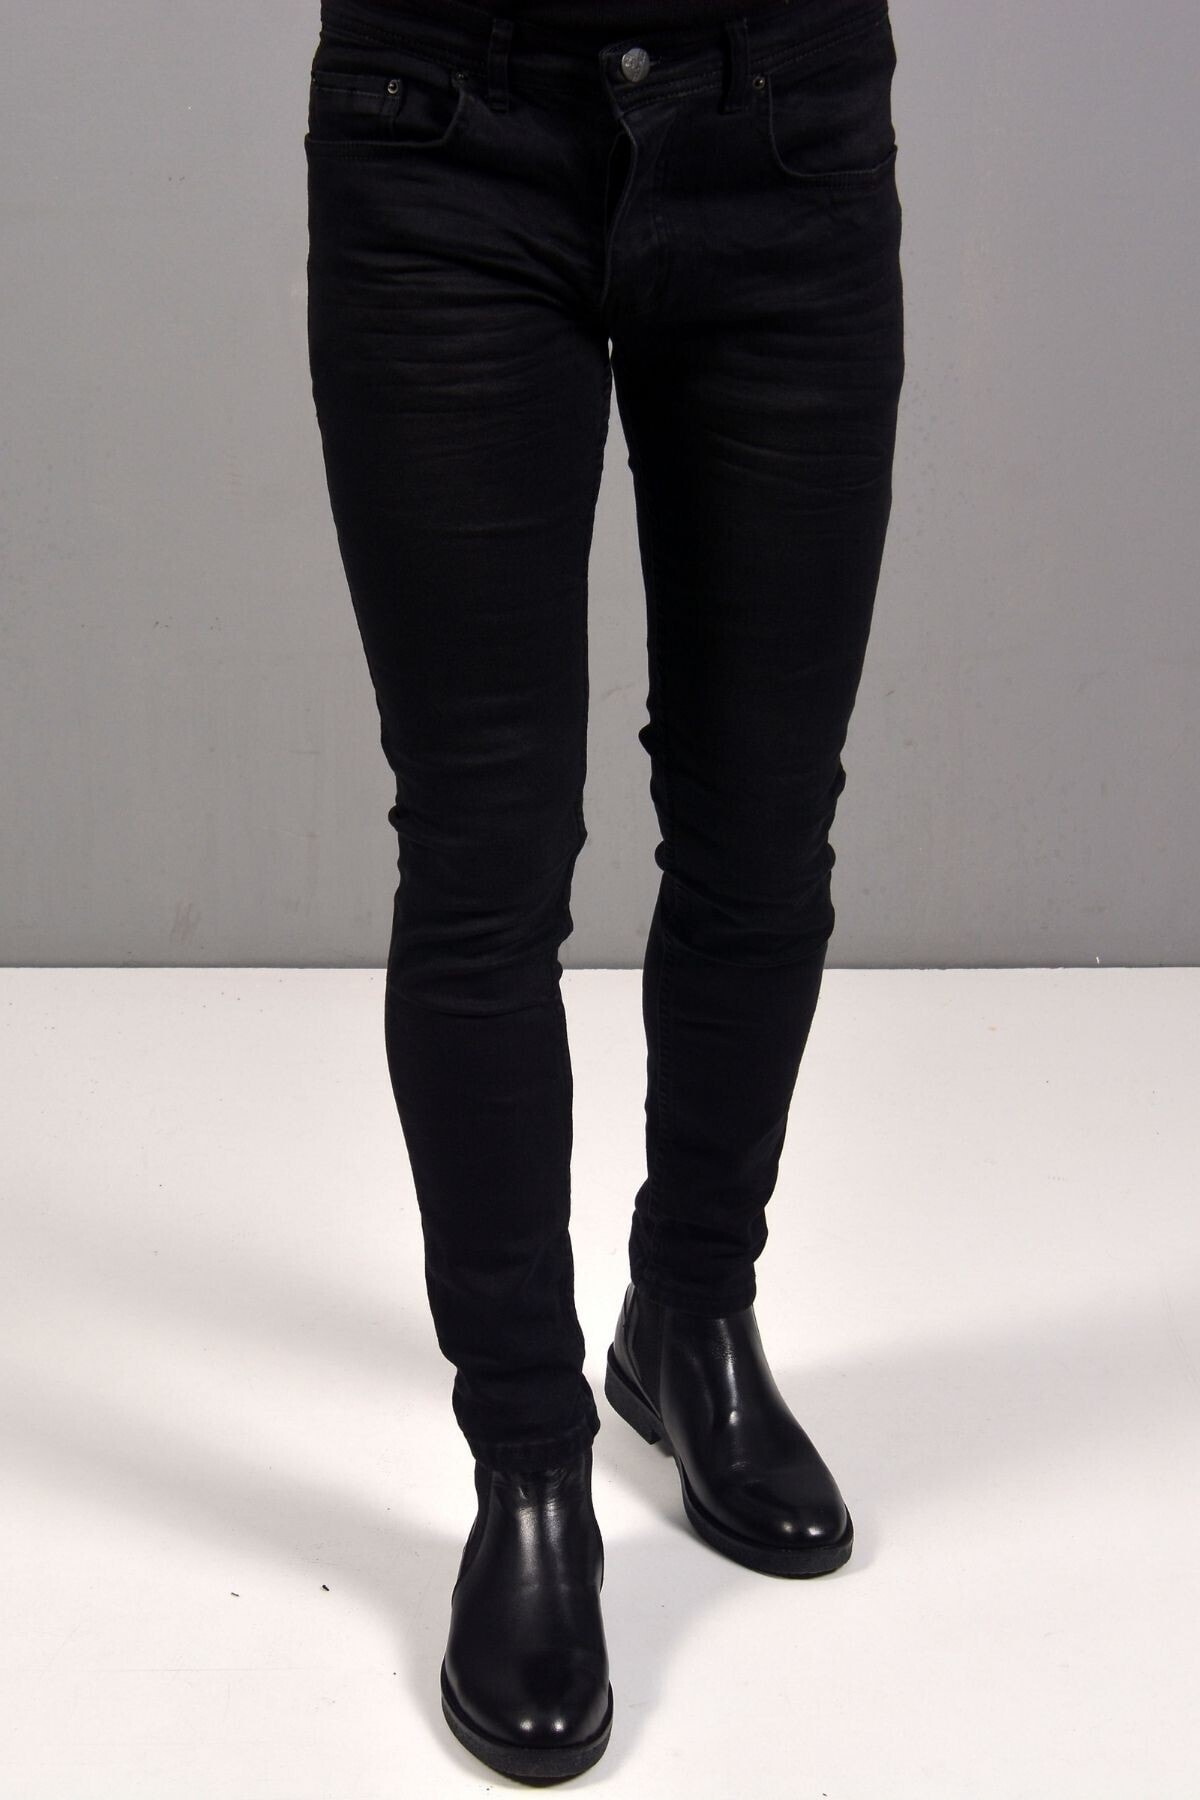 Kocmen Koçmen Erkek Süper Skınny Fit Likralı Siyah Kot Pantolon K0077 - Siyah